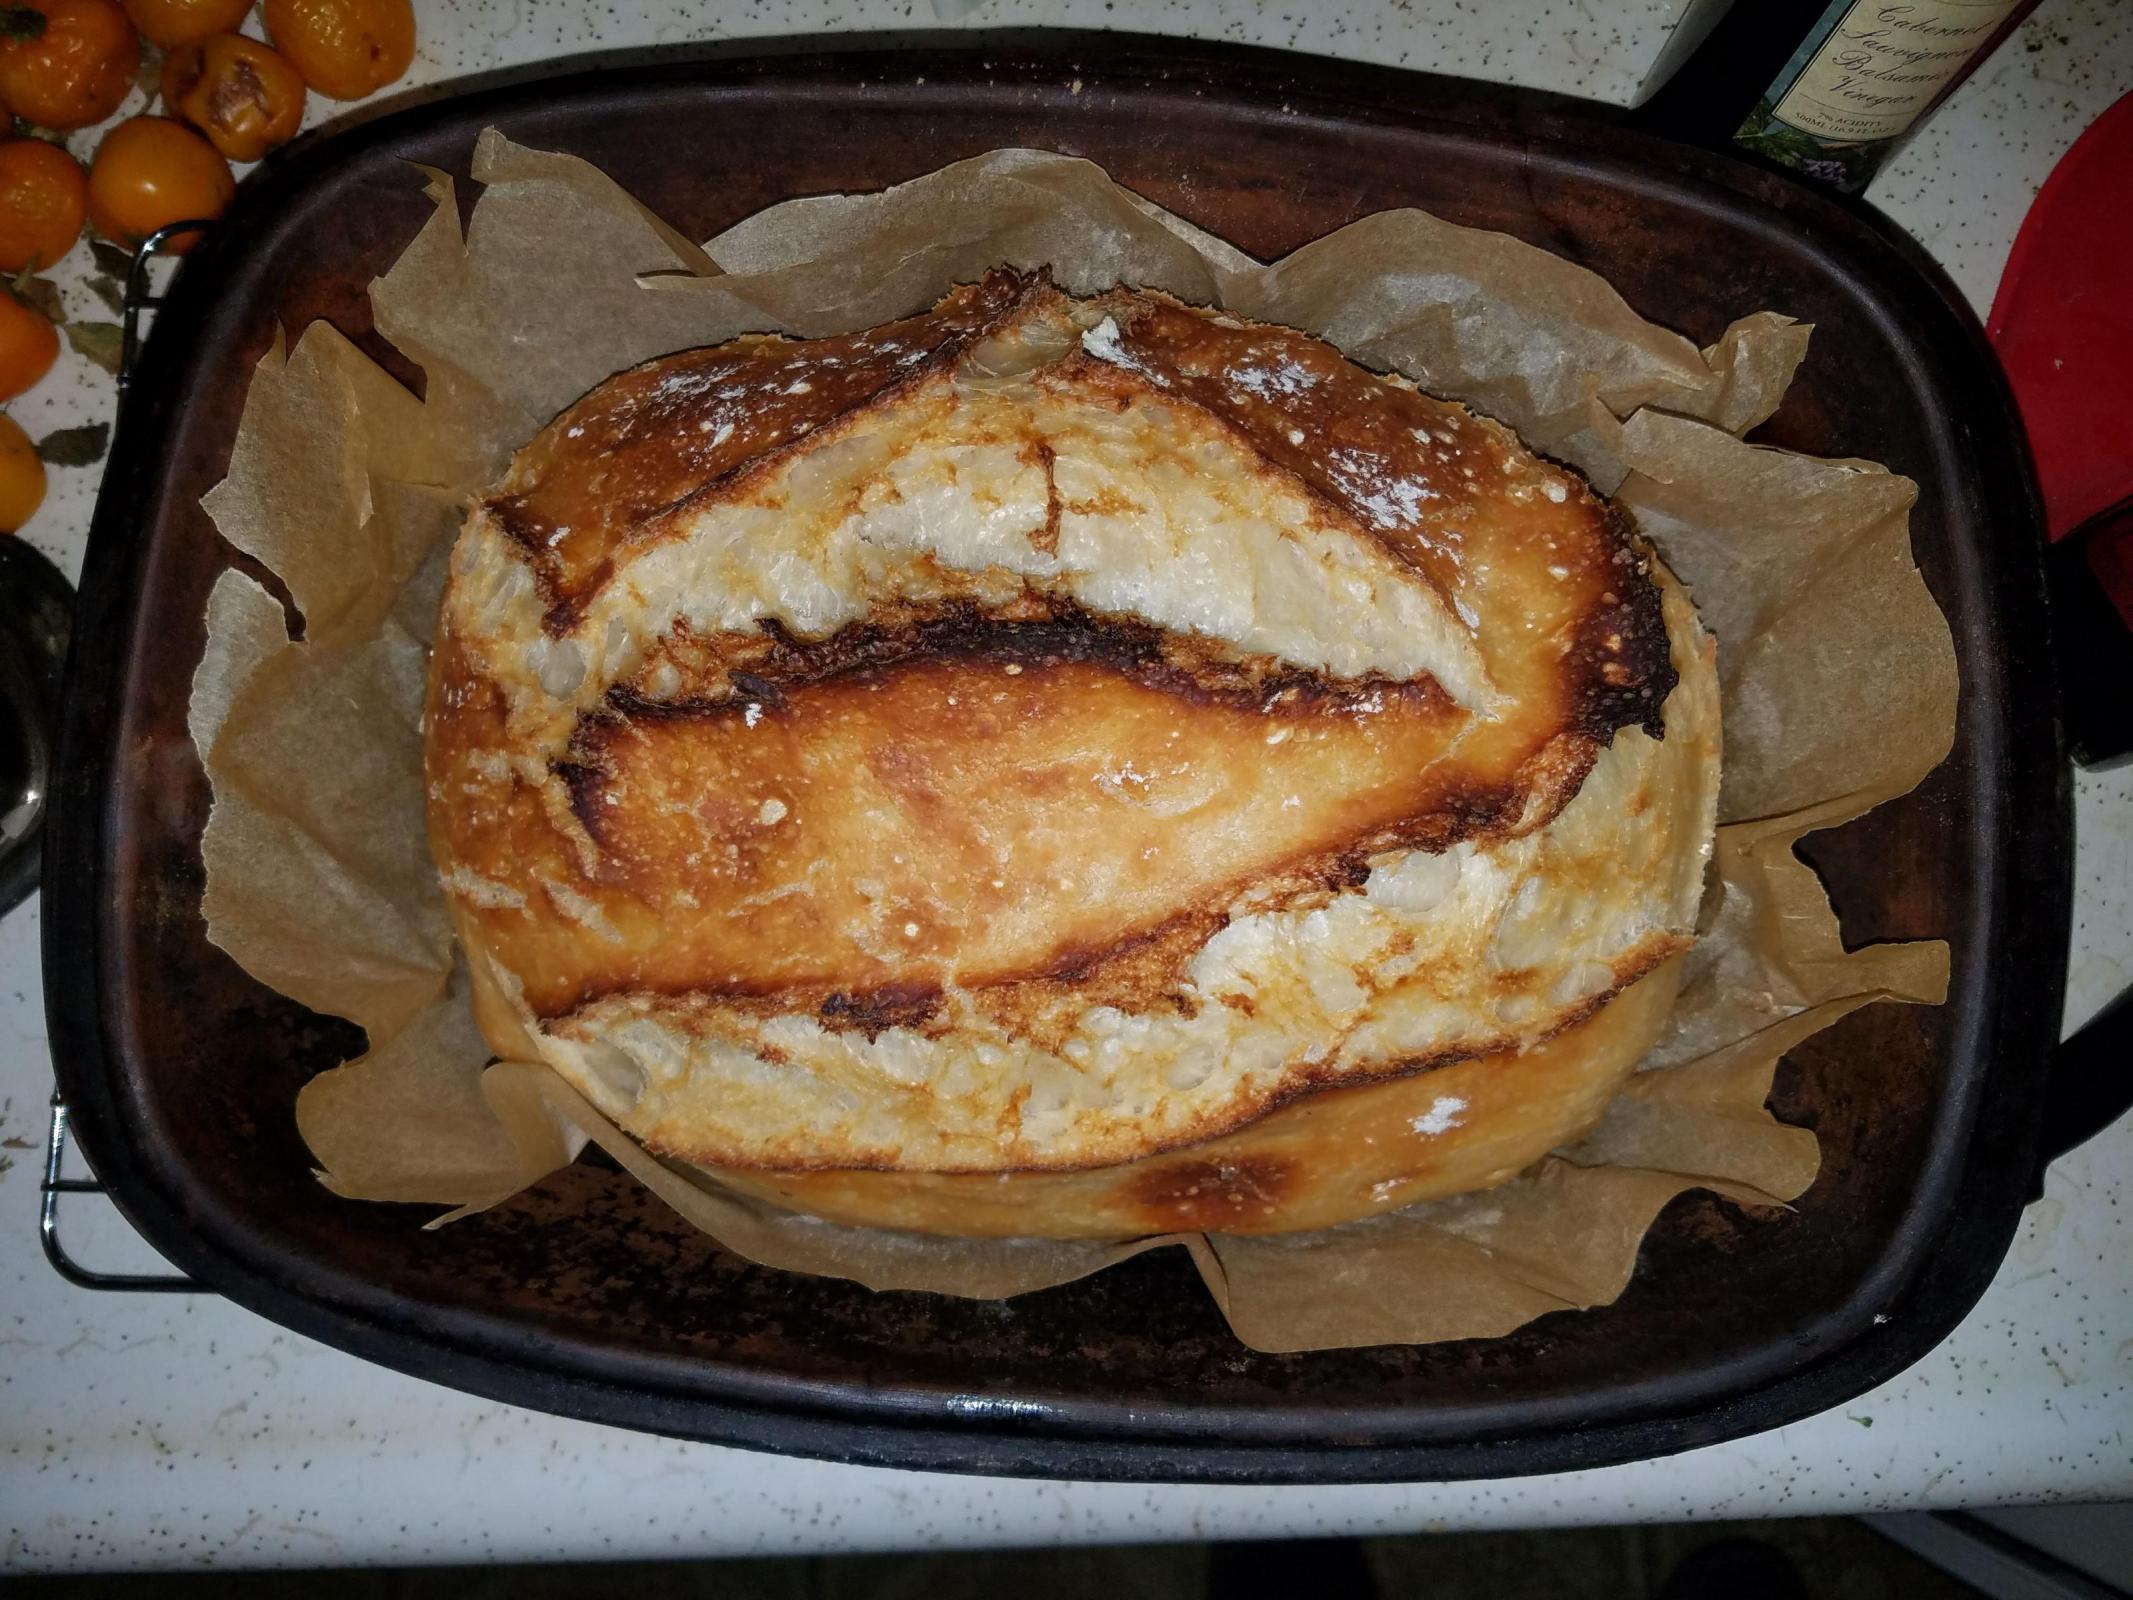 Carrot Bread in a Clay Baker: HBinFive - Bread Experience